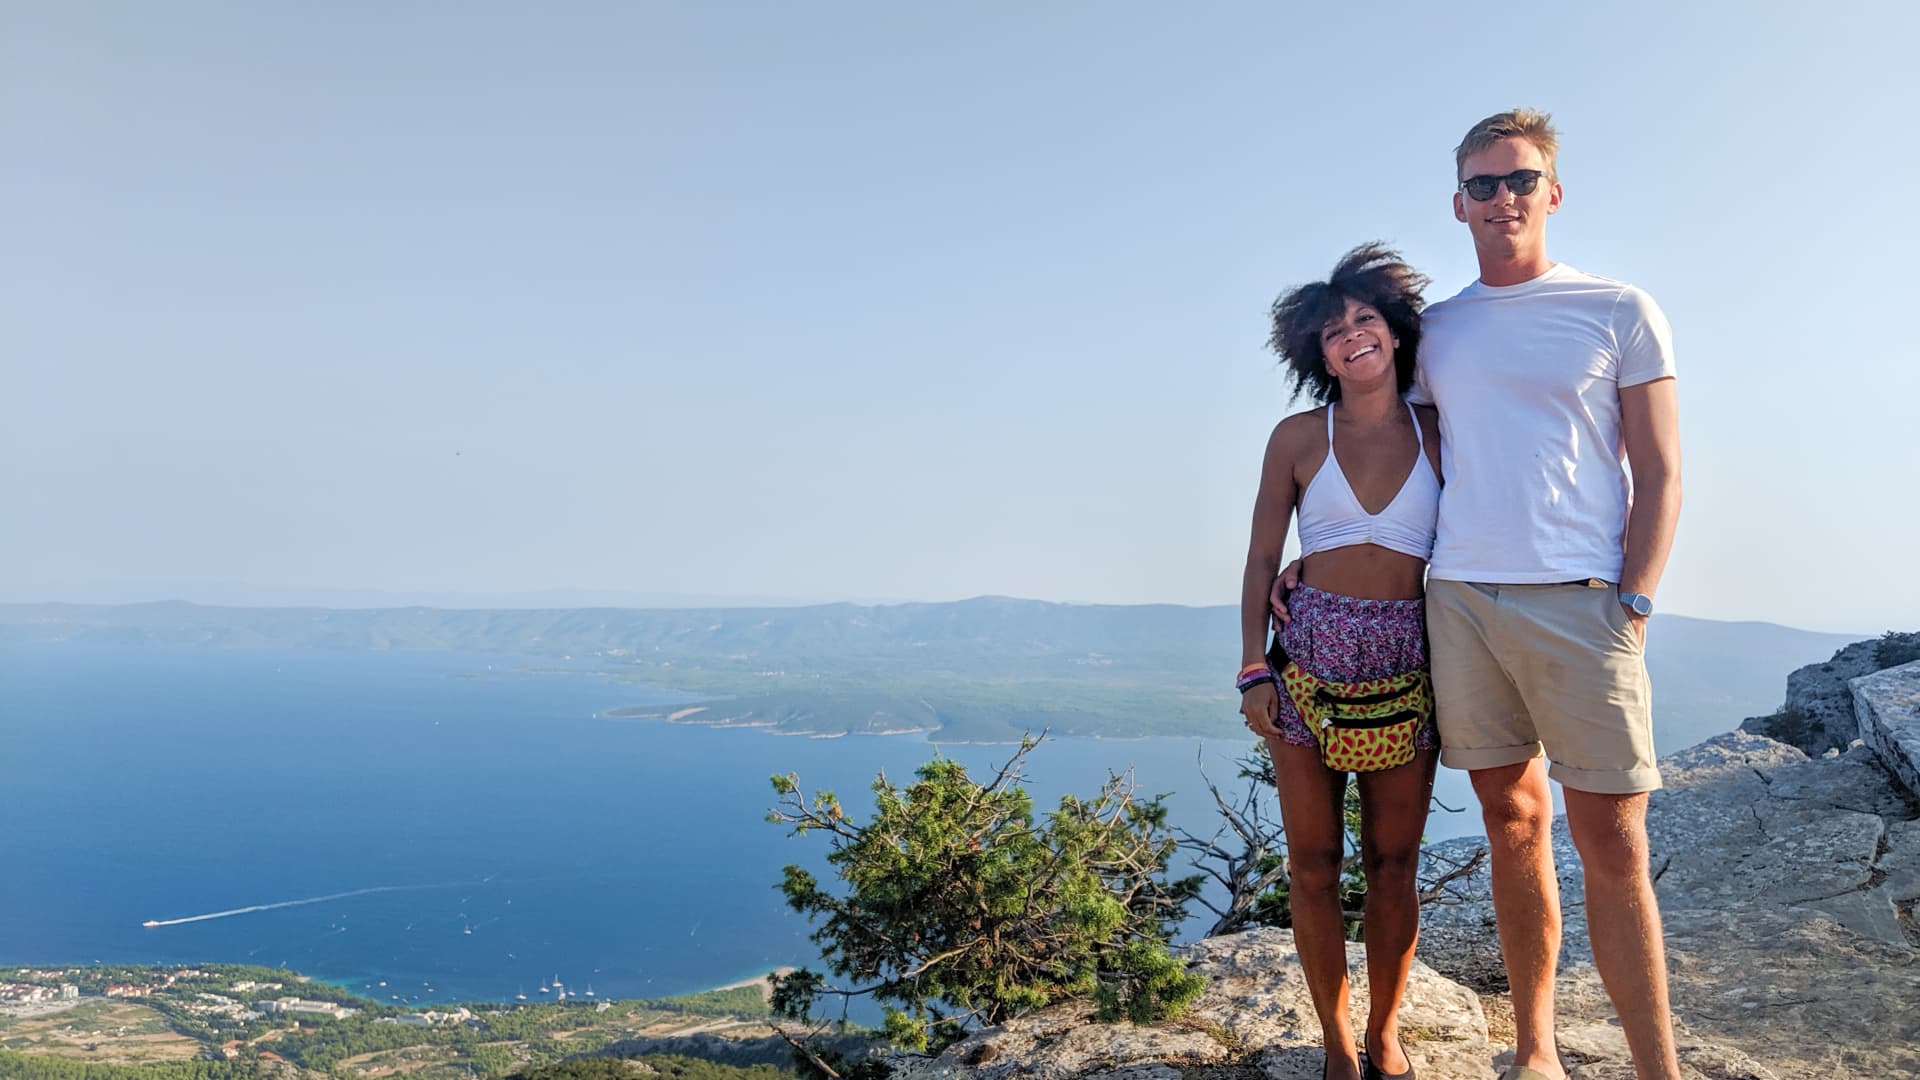 Kesi Irvin and her boyfriend Alex exploring Croatia together